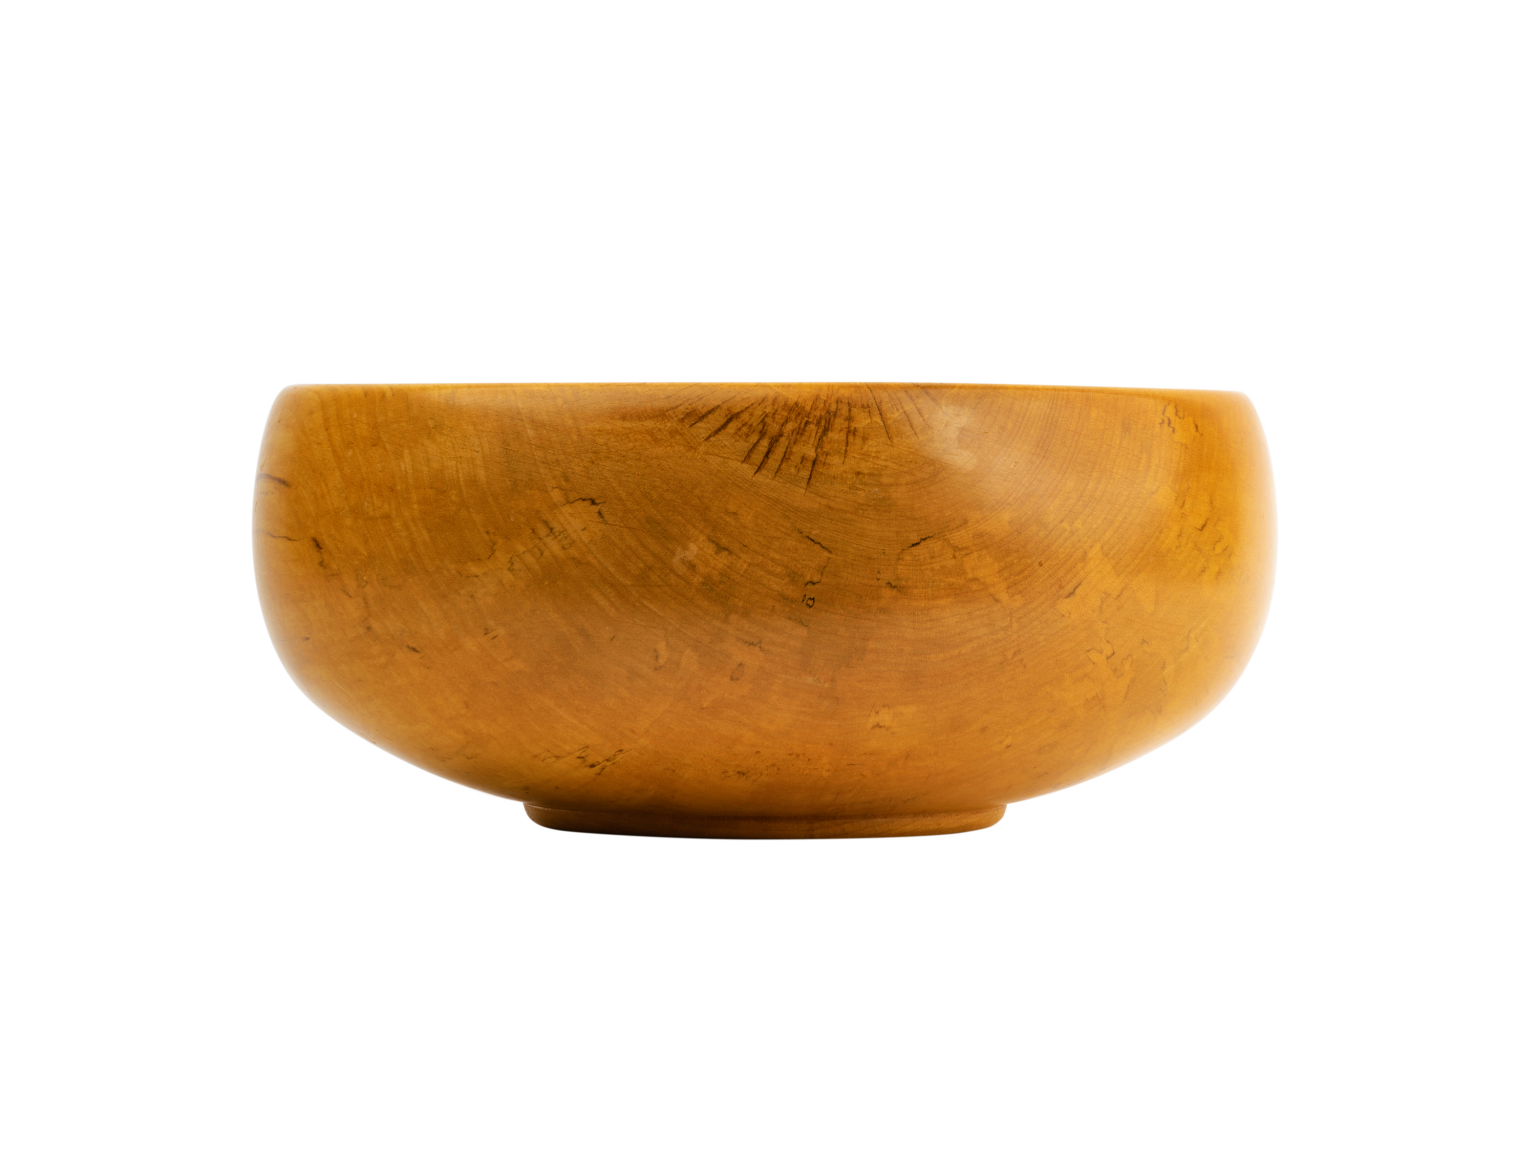 Maple turned studio art centerpiece bowl